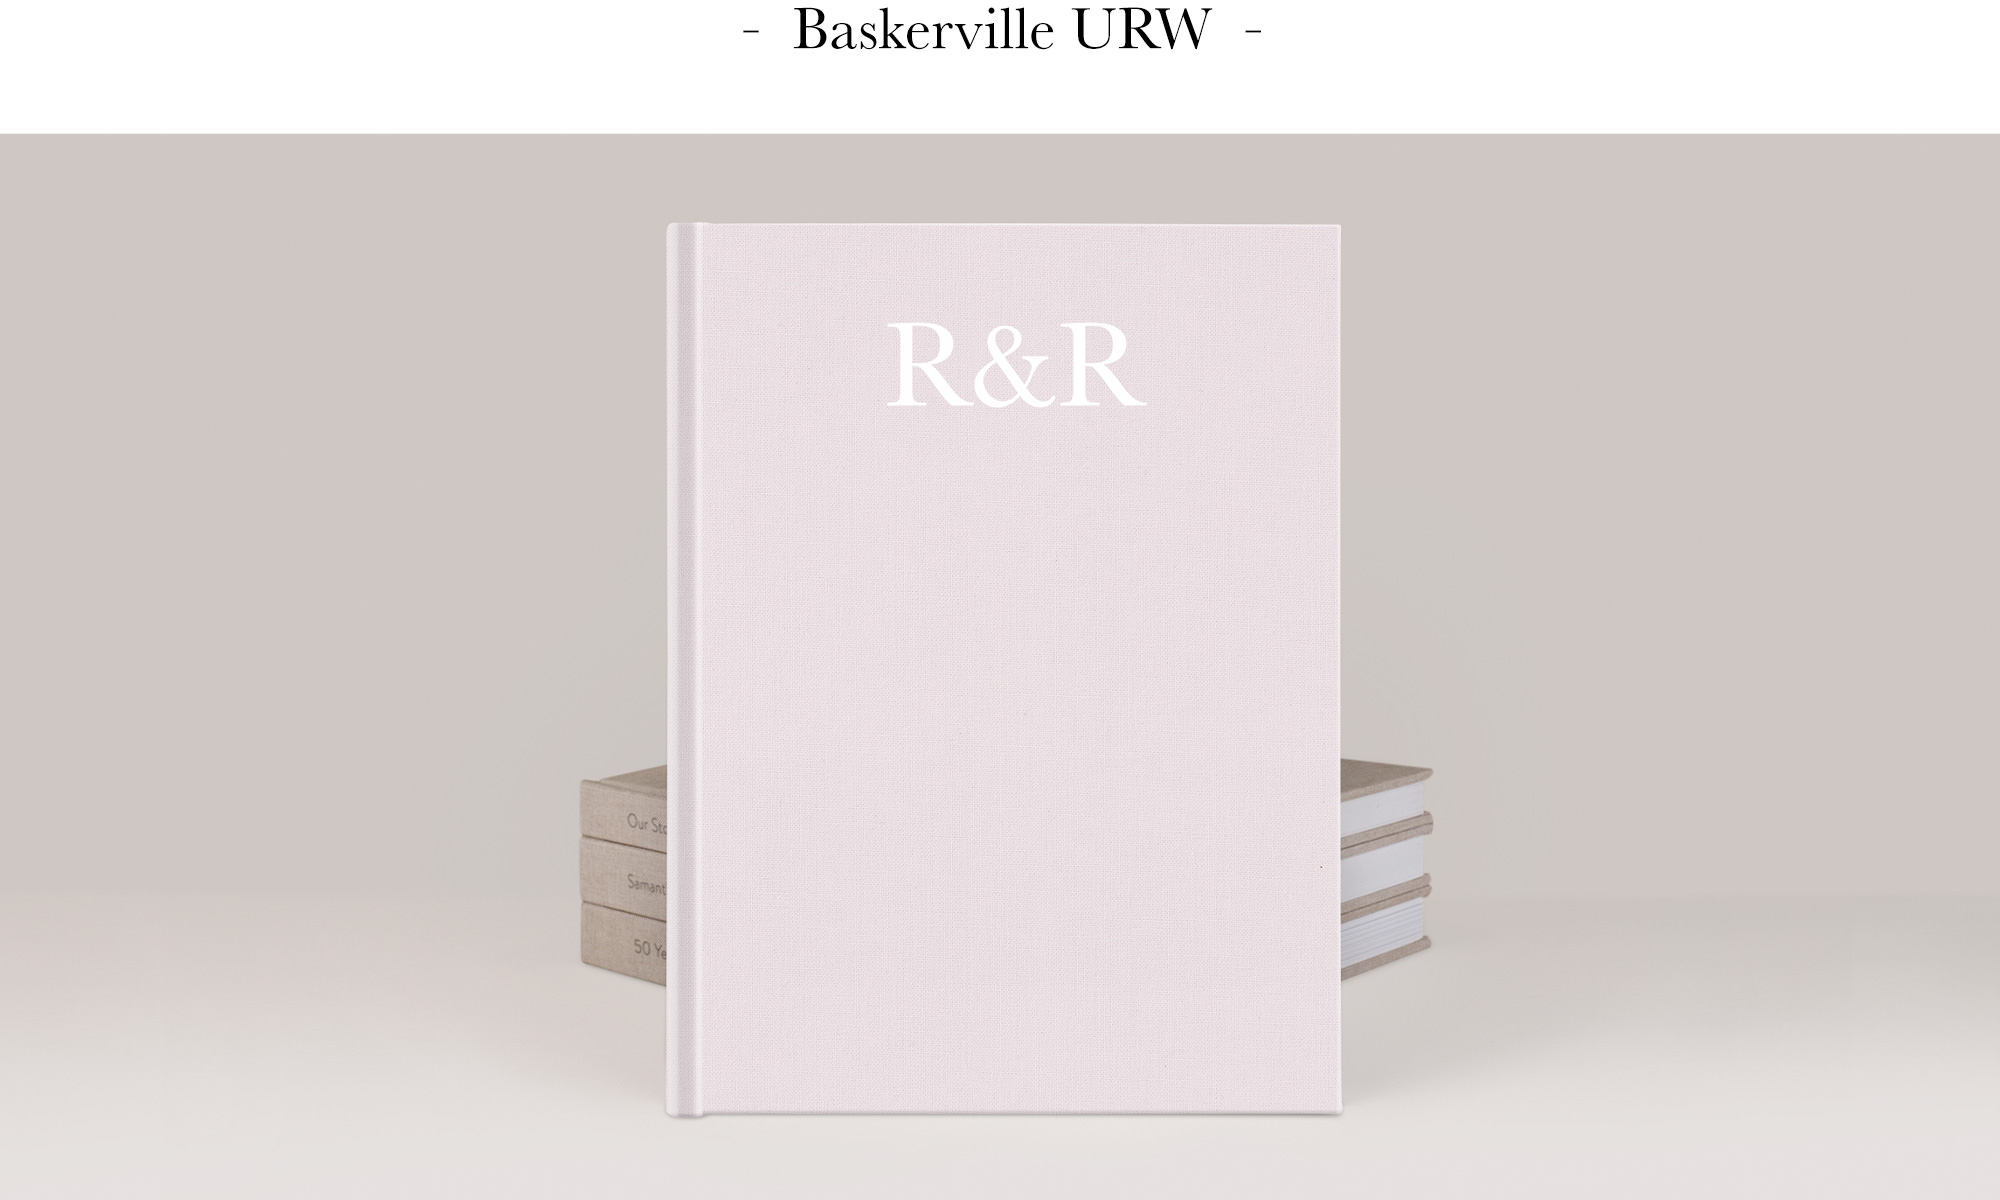 Premium Photo Book with Baskerville font title